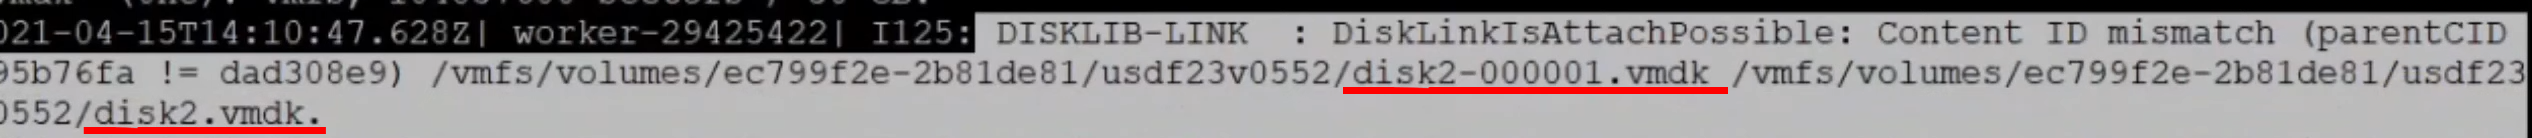 DISKLIB-LINK-Text auf Putty Terminal.